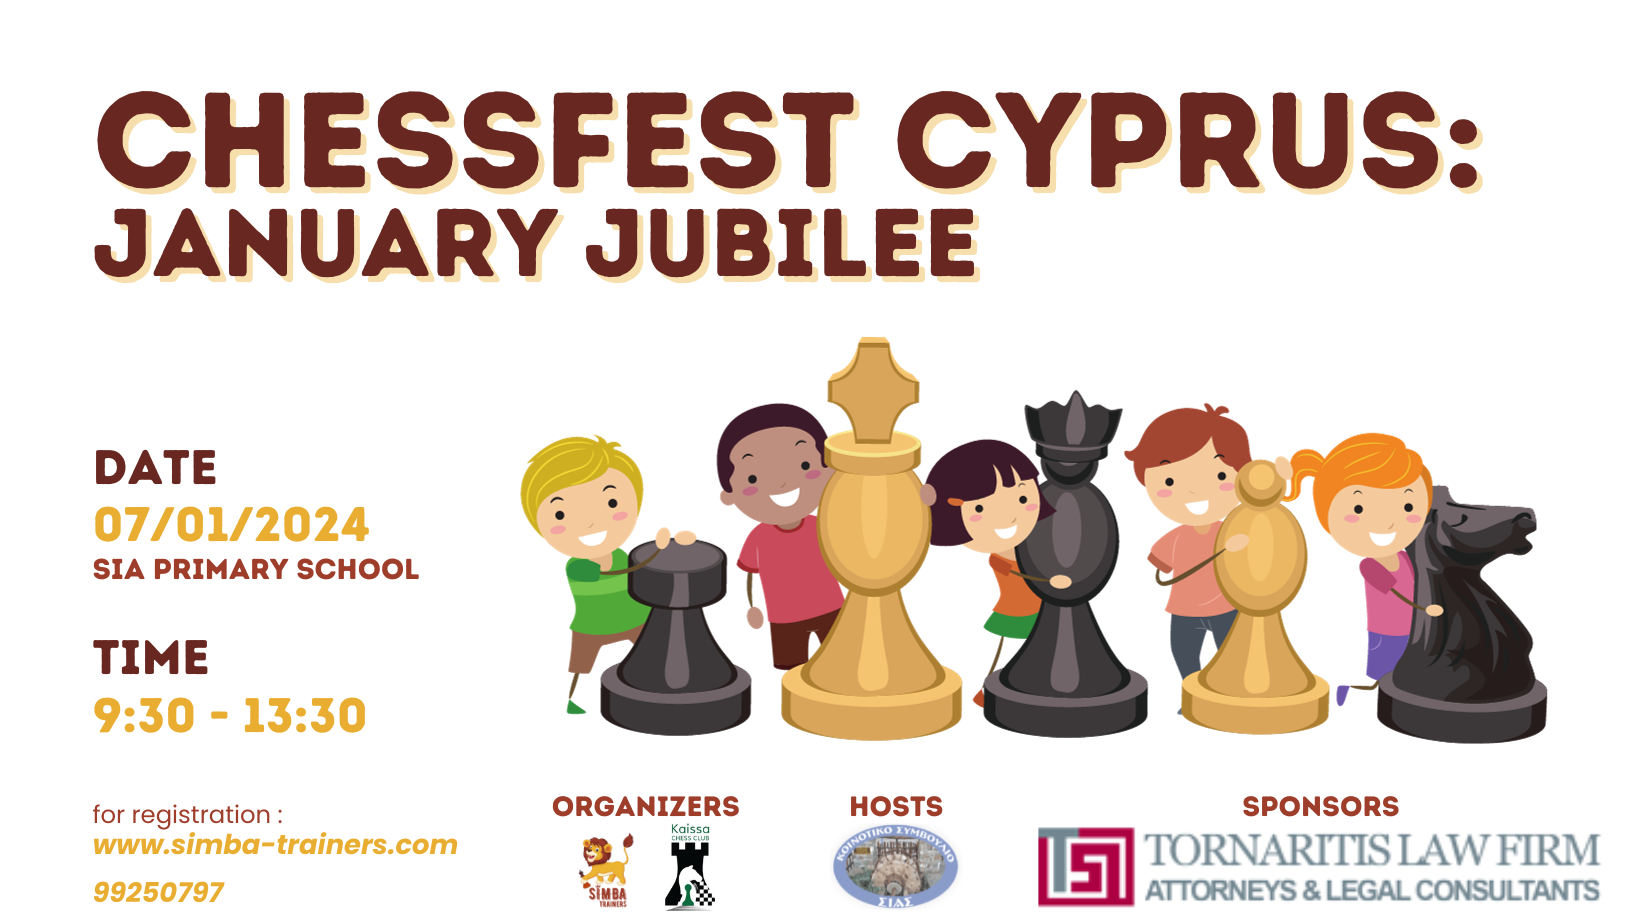 ChessFest Cyprus January